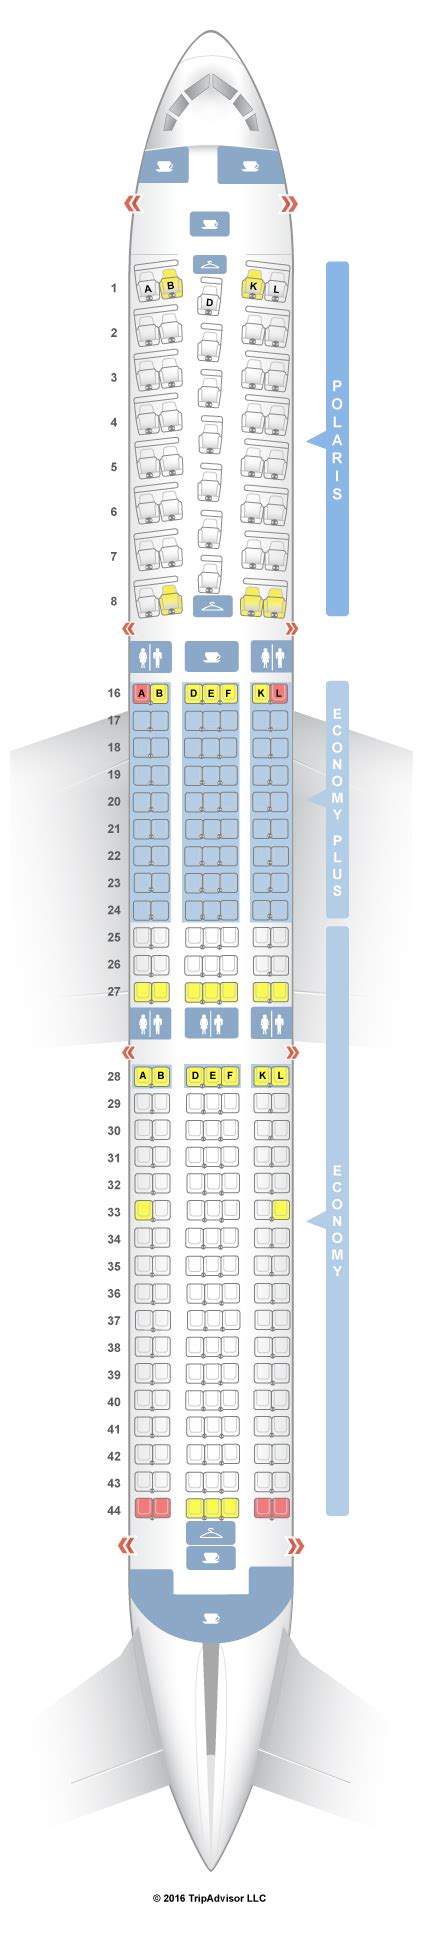 united boeing 767-400er seating chart